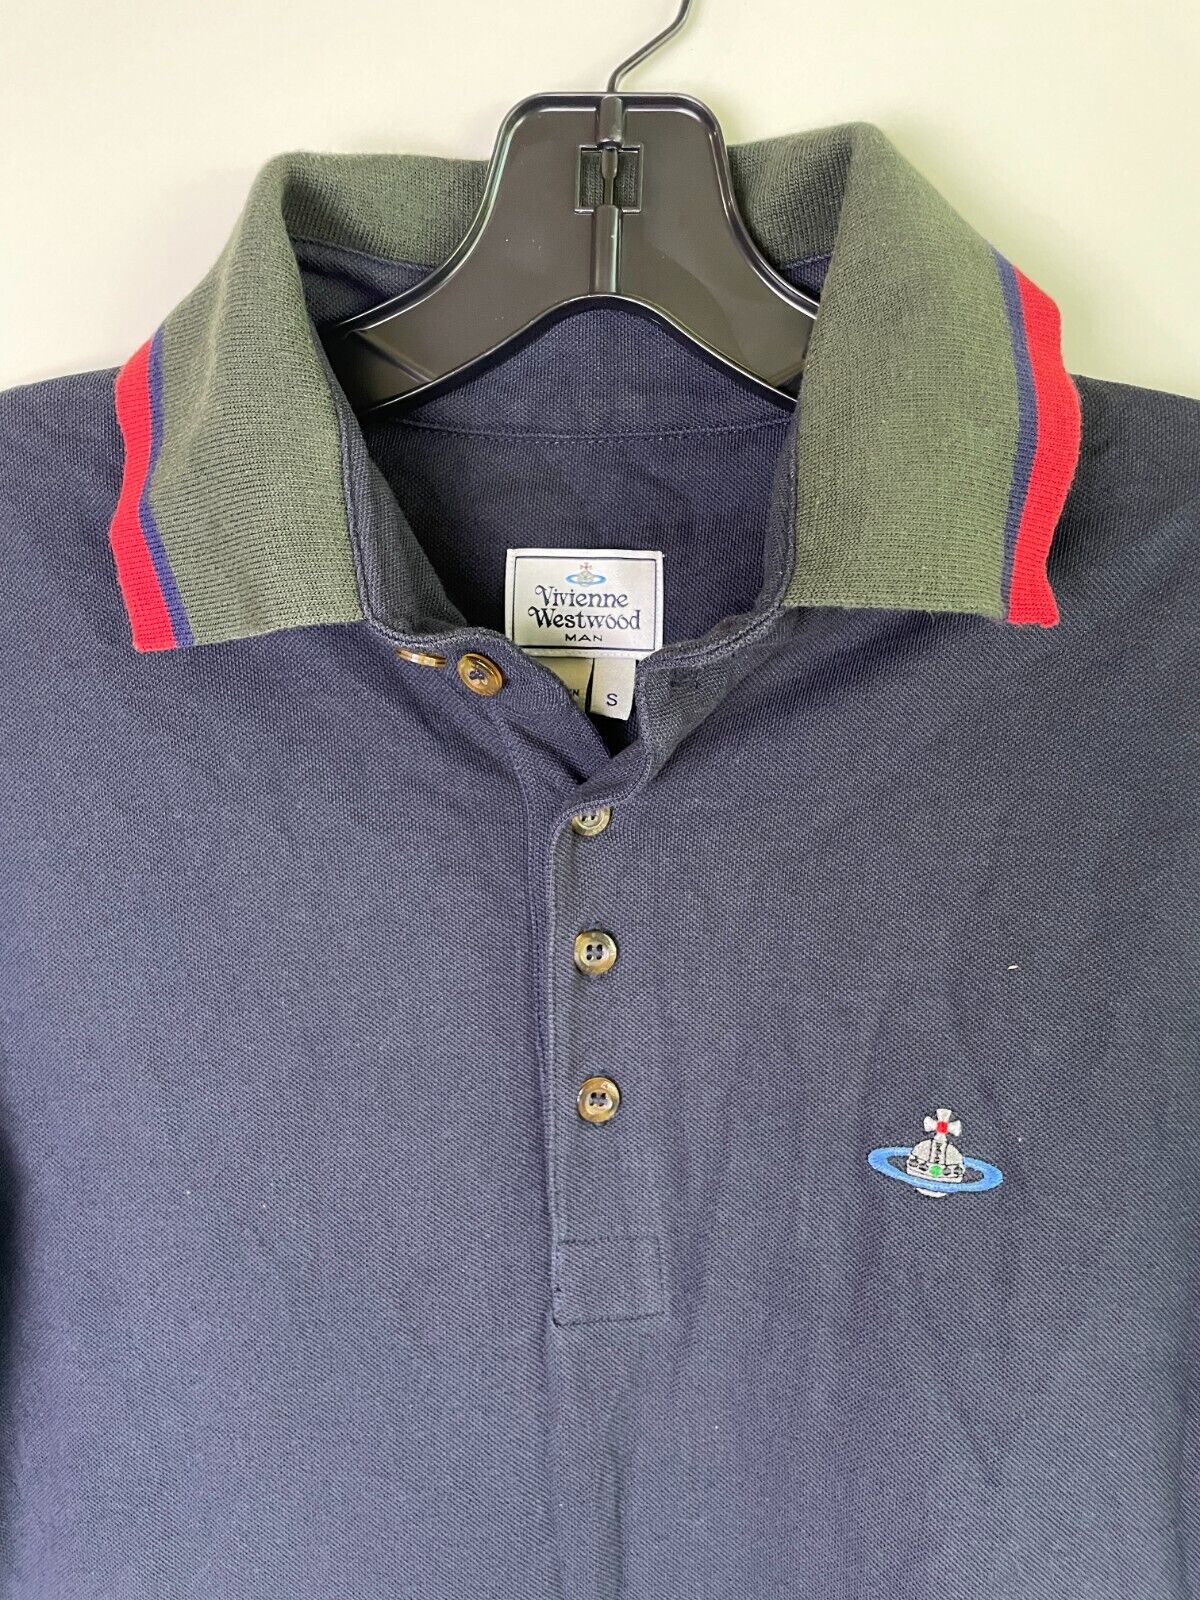 Vivienne Westwood Mens S Polo Shirt Navy Short Sleeve Striped Collar Golf